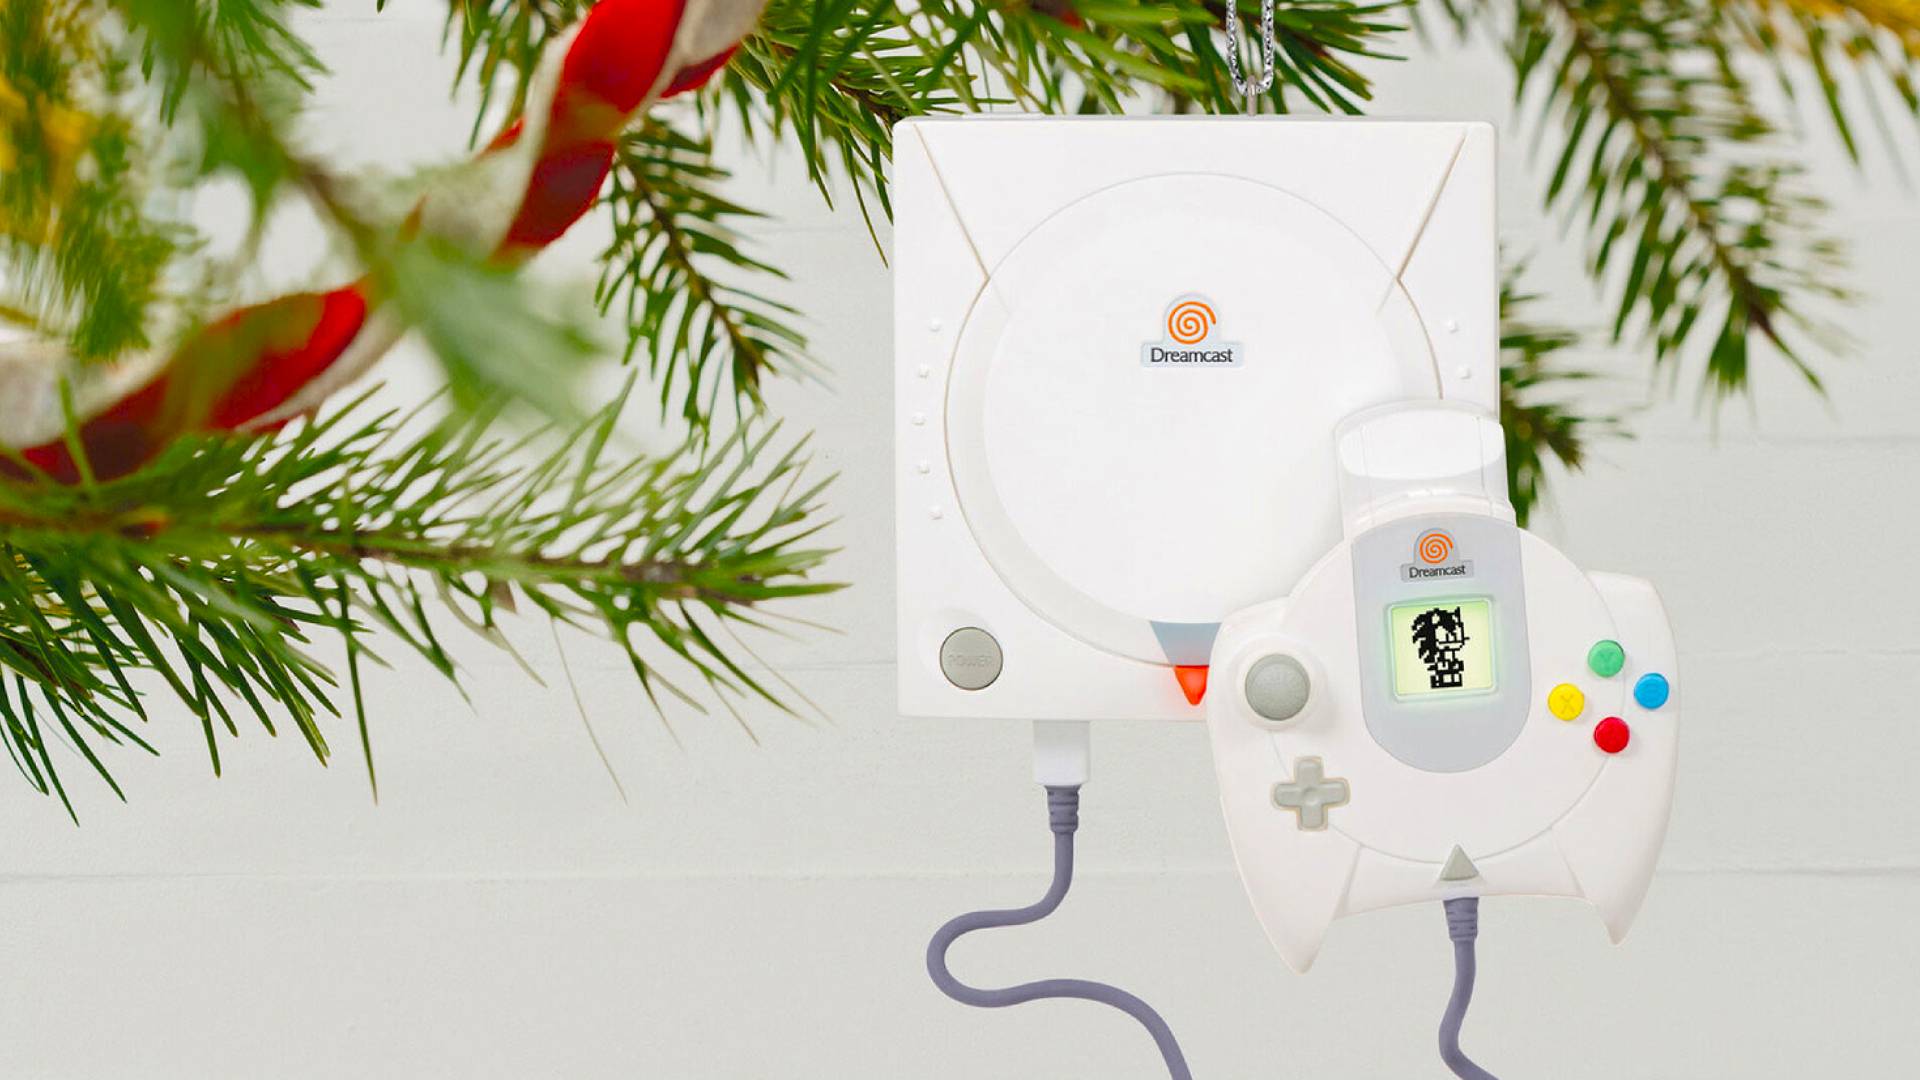 I'm not starting Christmas until I get this Sega Dreamcast ornament